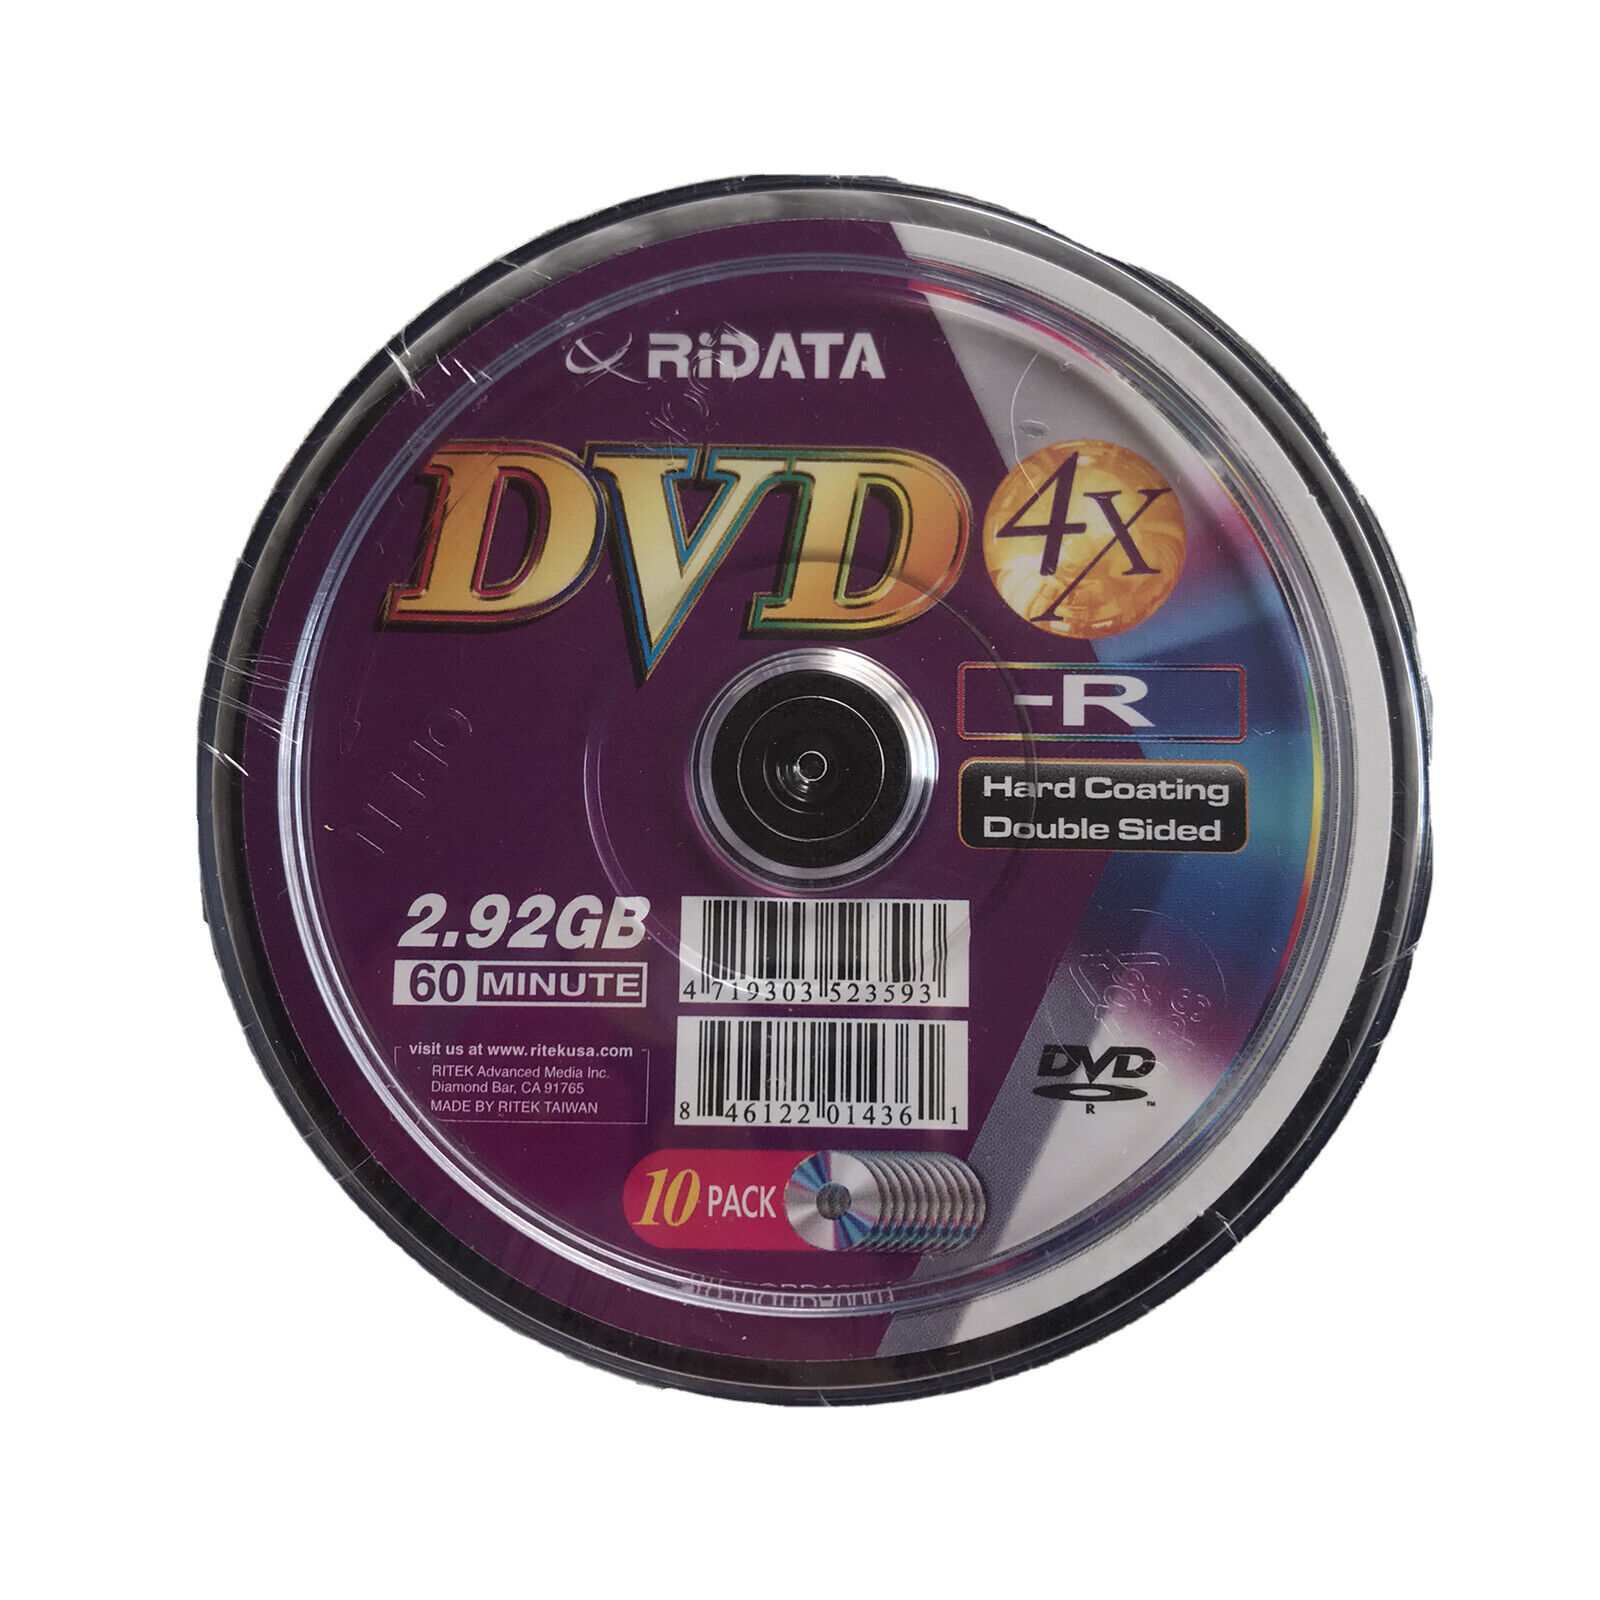 Ritek Ridata Mini DVD R 4x 2.92 GB 60min Cake 10pk Spindle Hard Coating 2 Sided